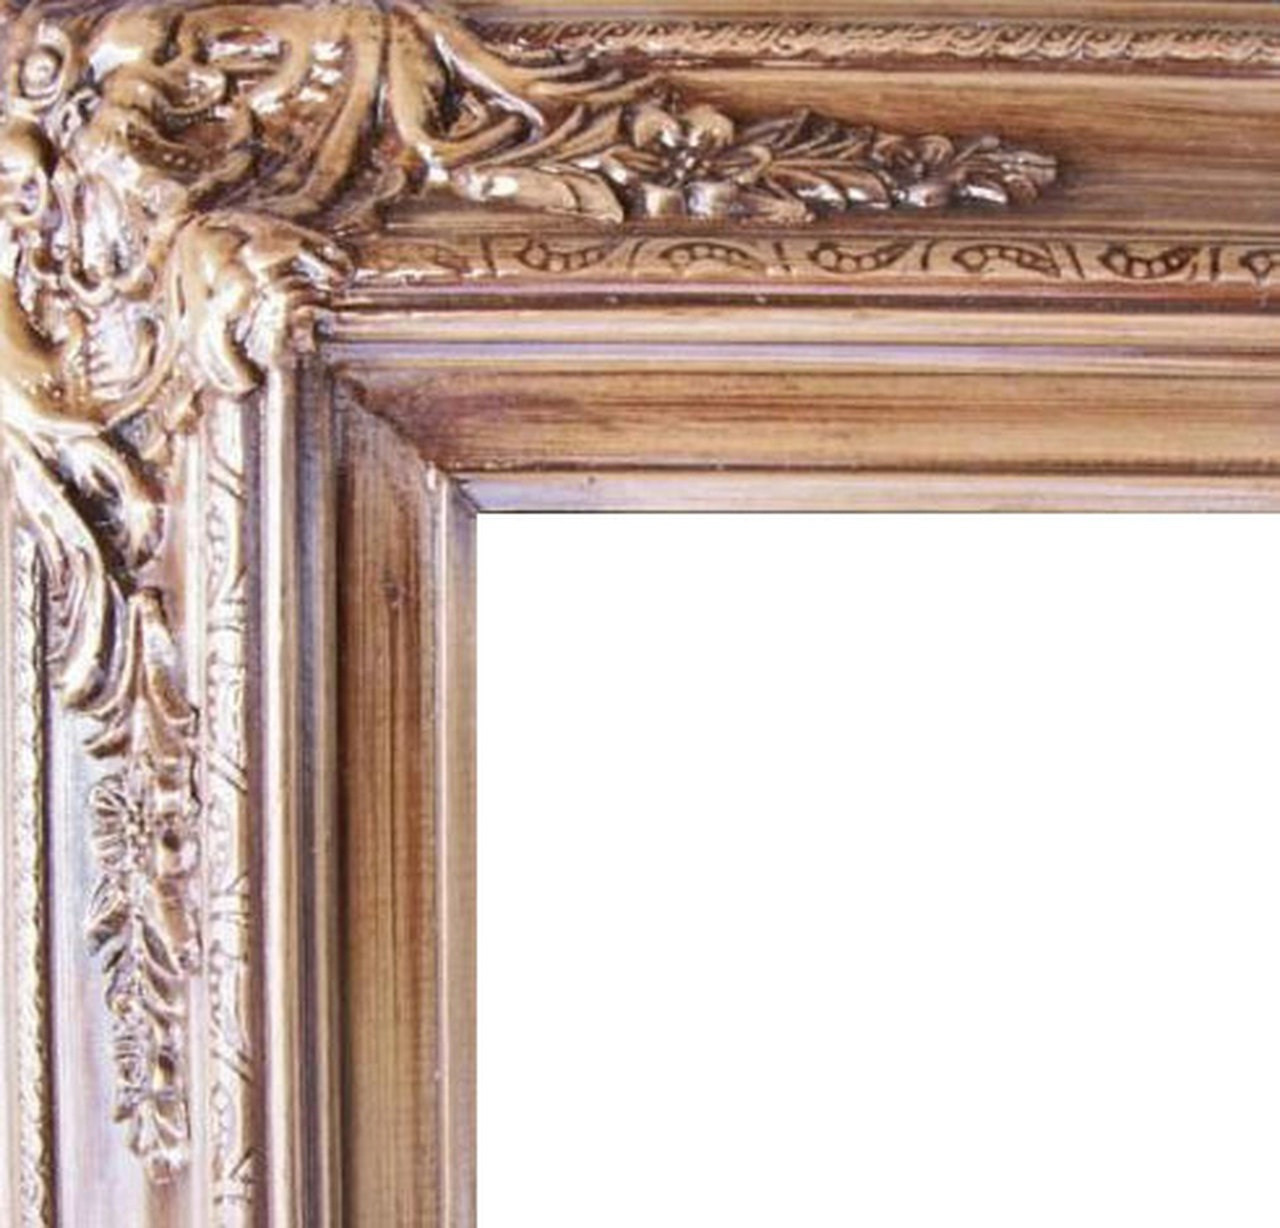 4" Ornate Wood Frames: 22X28*